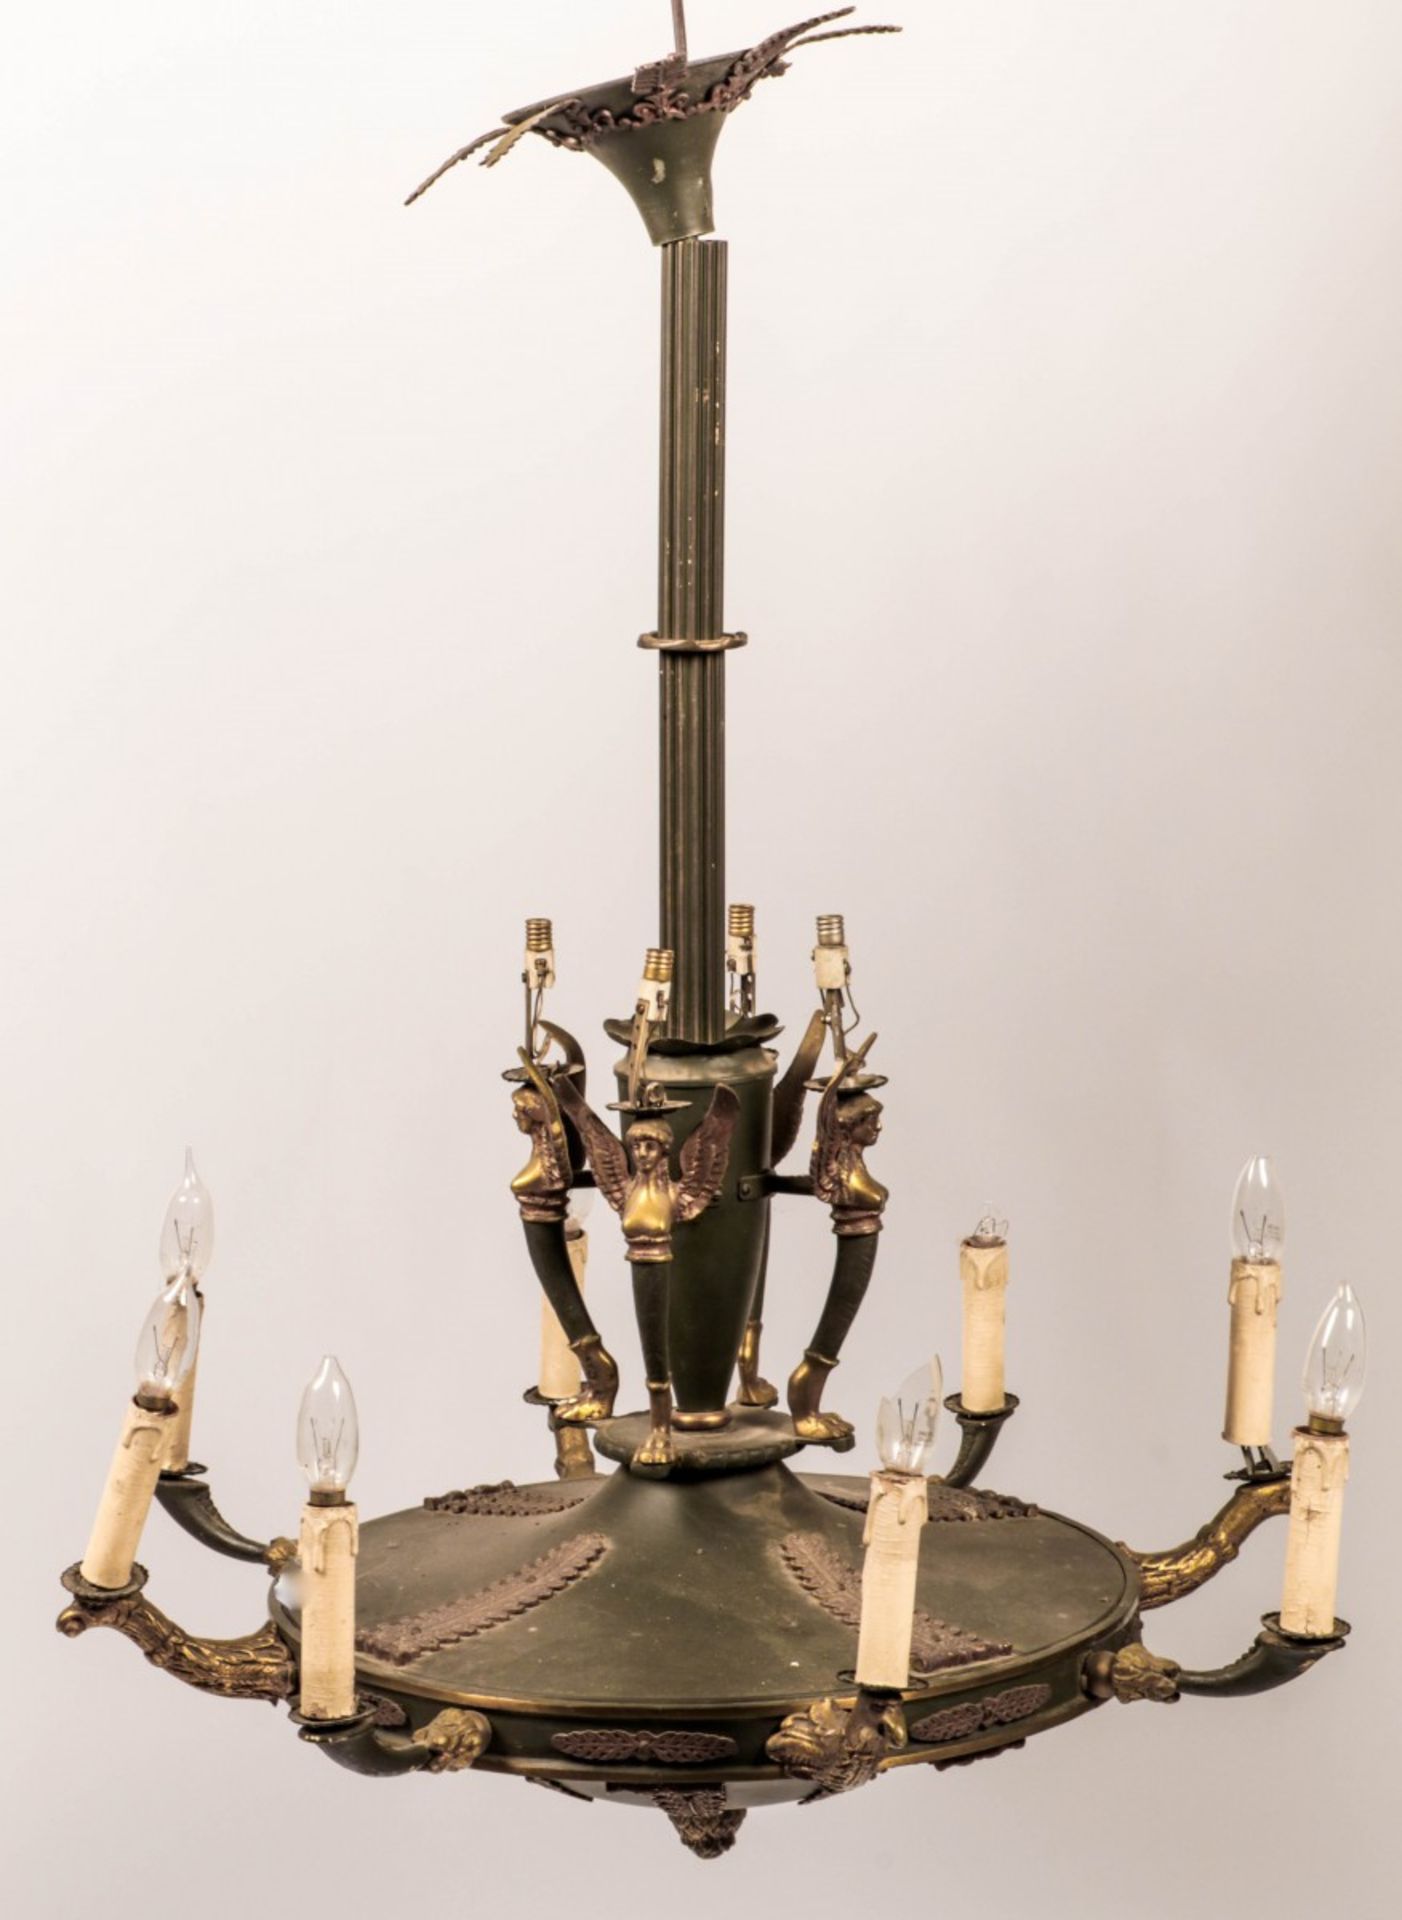 A Zamak Empire-style chandelier, France, 20th century.